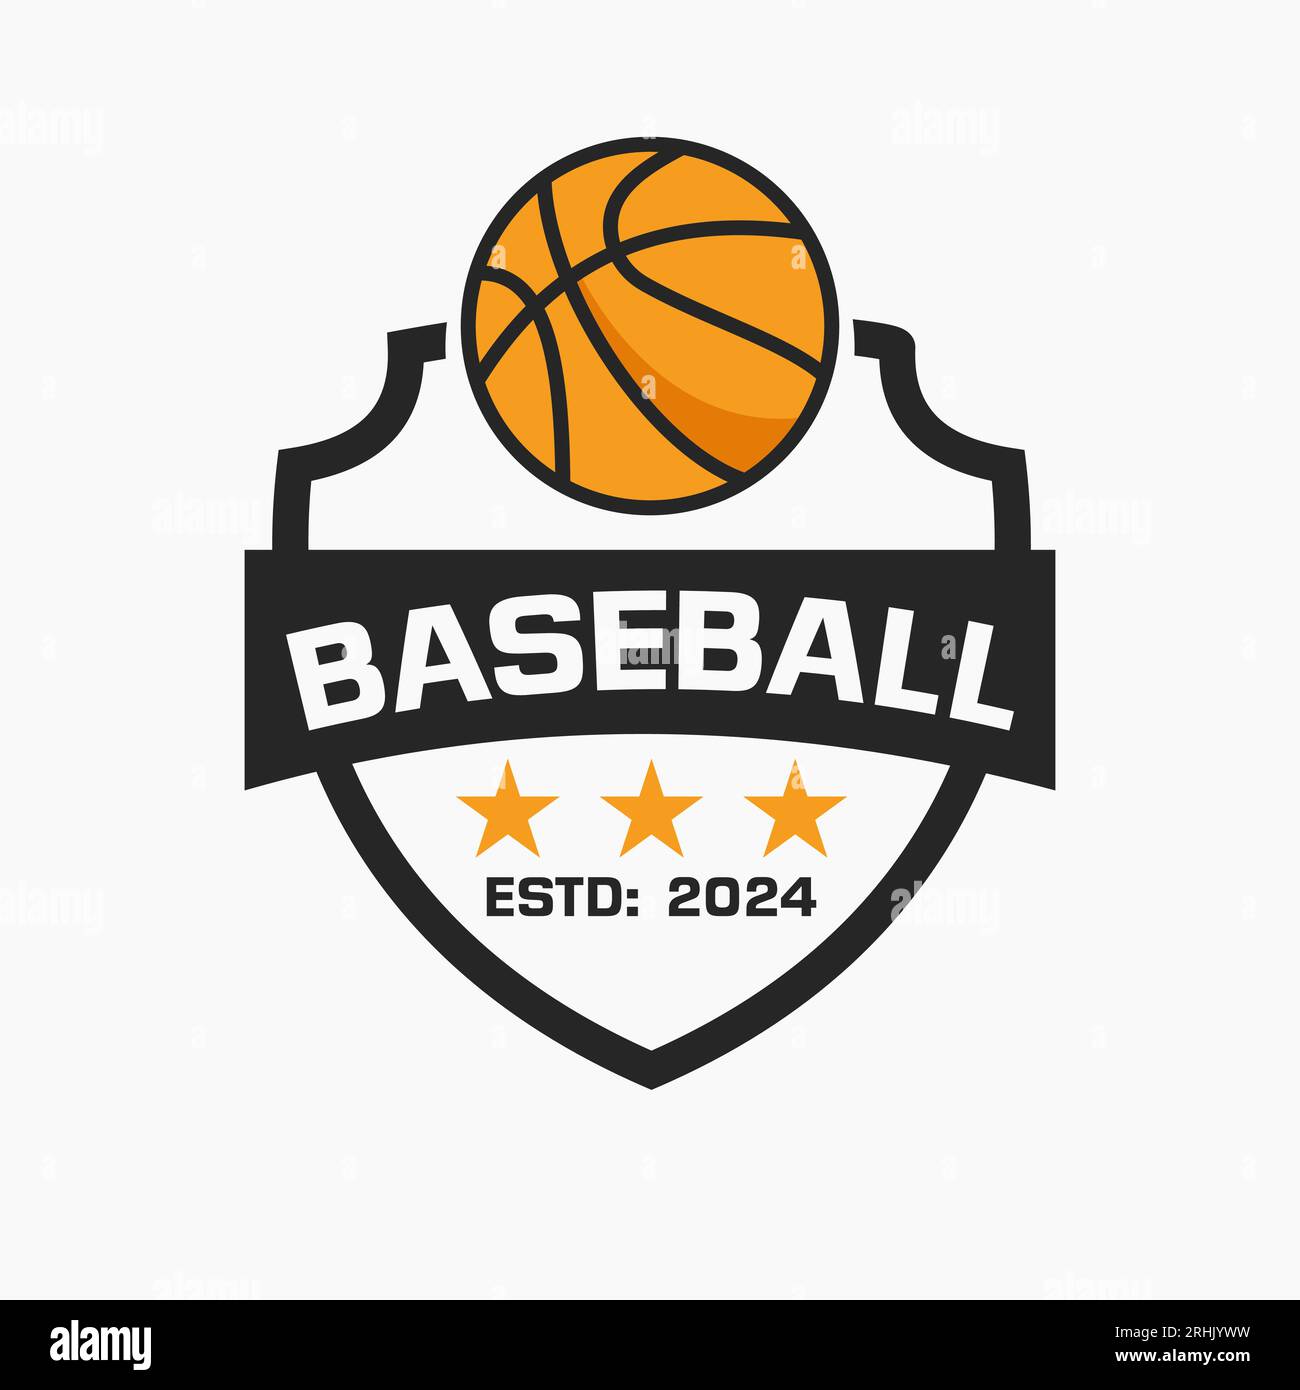 Basket Ball Logo Concept With Shield and Basketball Symbol Stock Vector